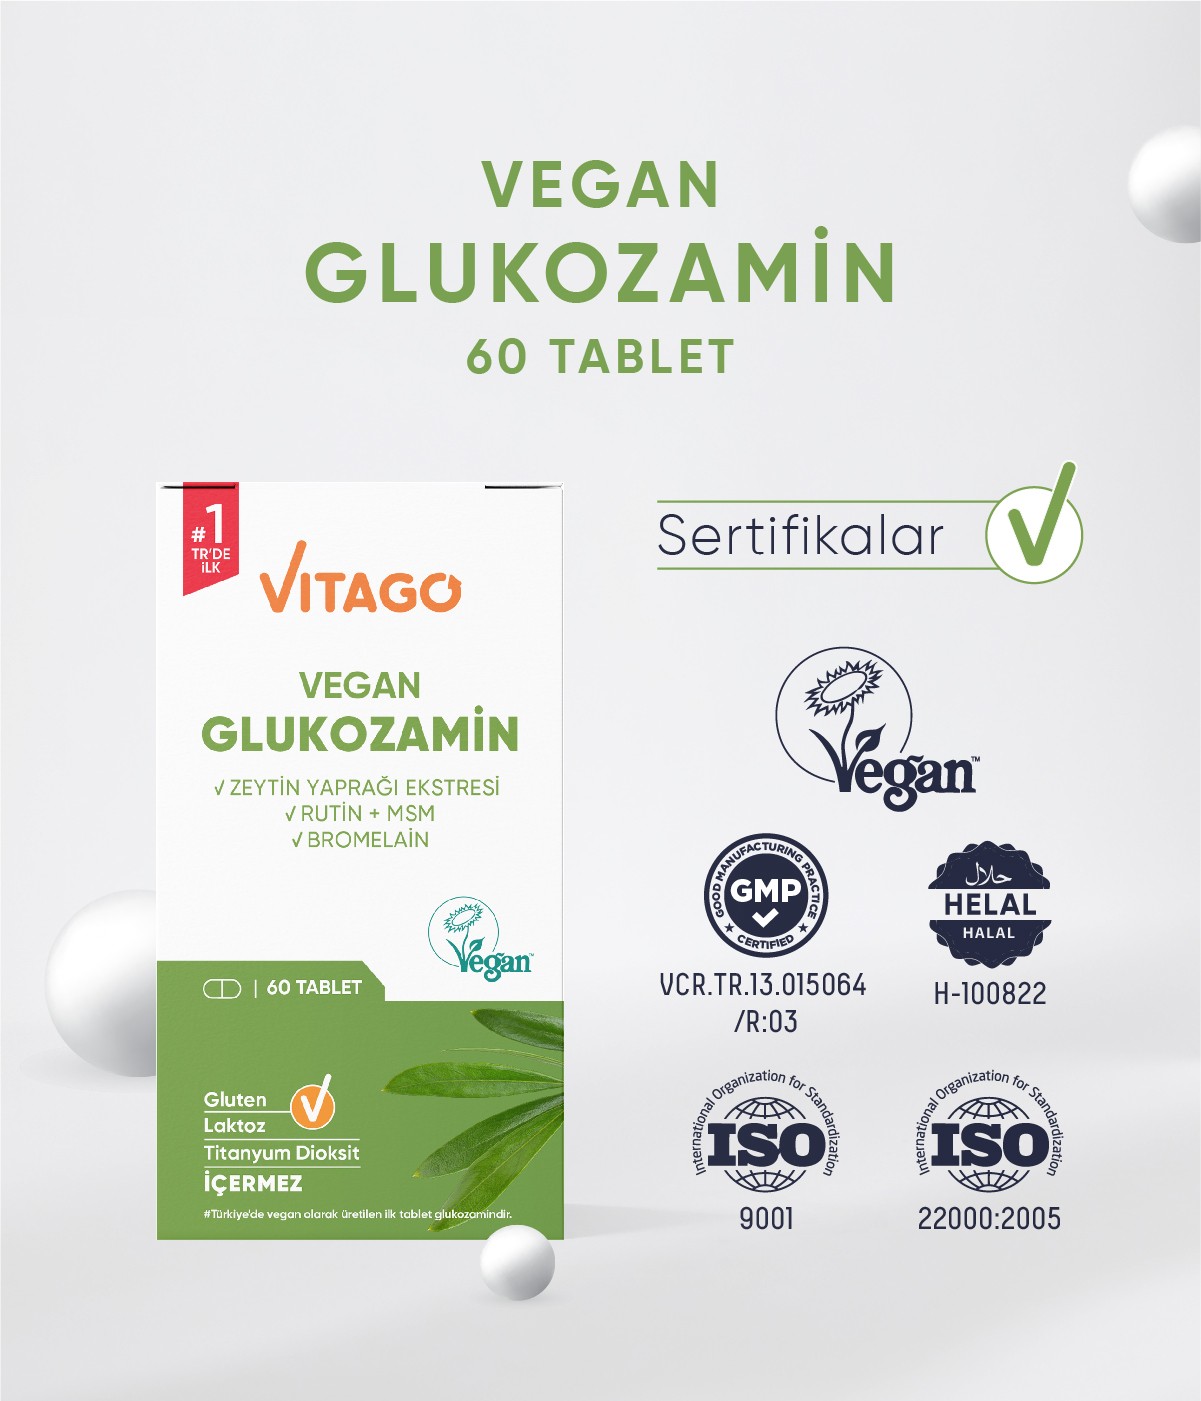 Vitago Premium Vegan Glukozamin, Bromelain, Rutin İçeren 60 Tablet